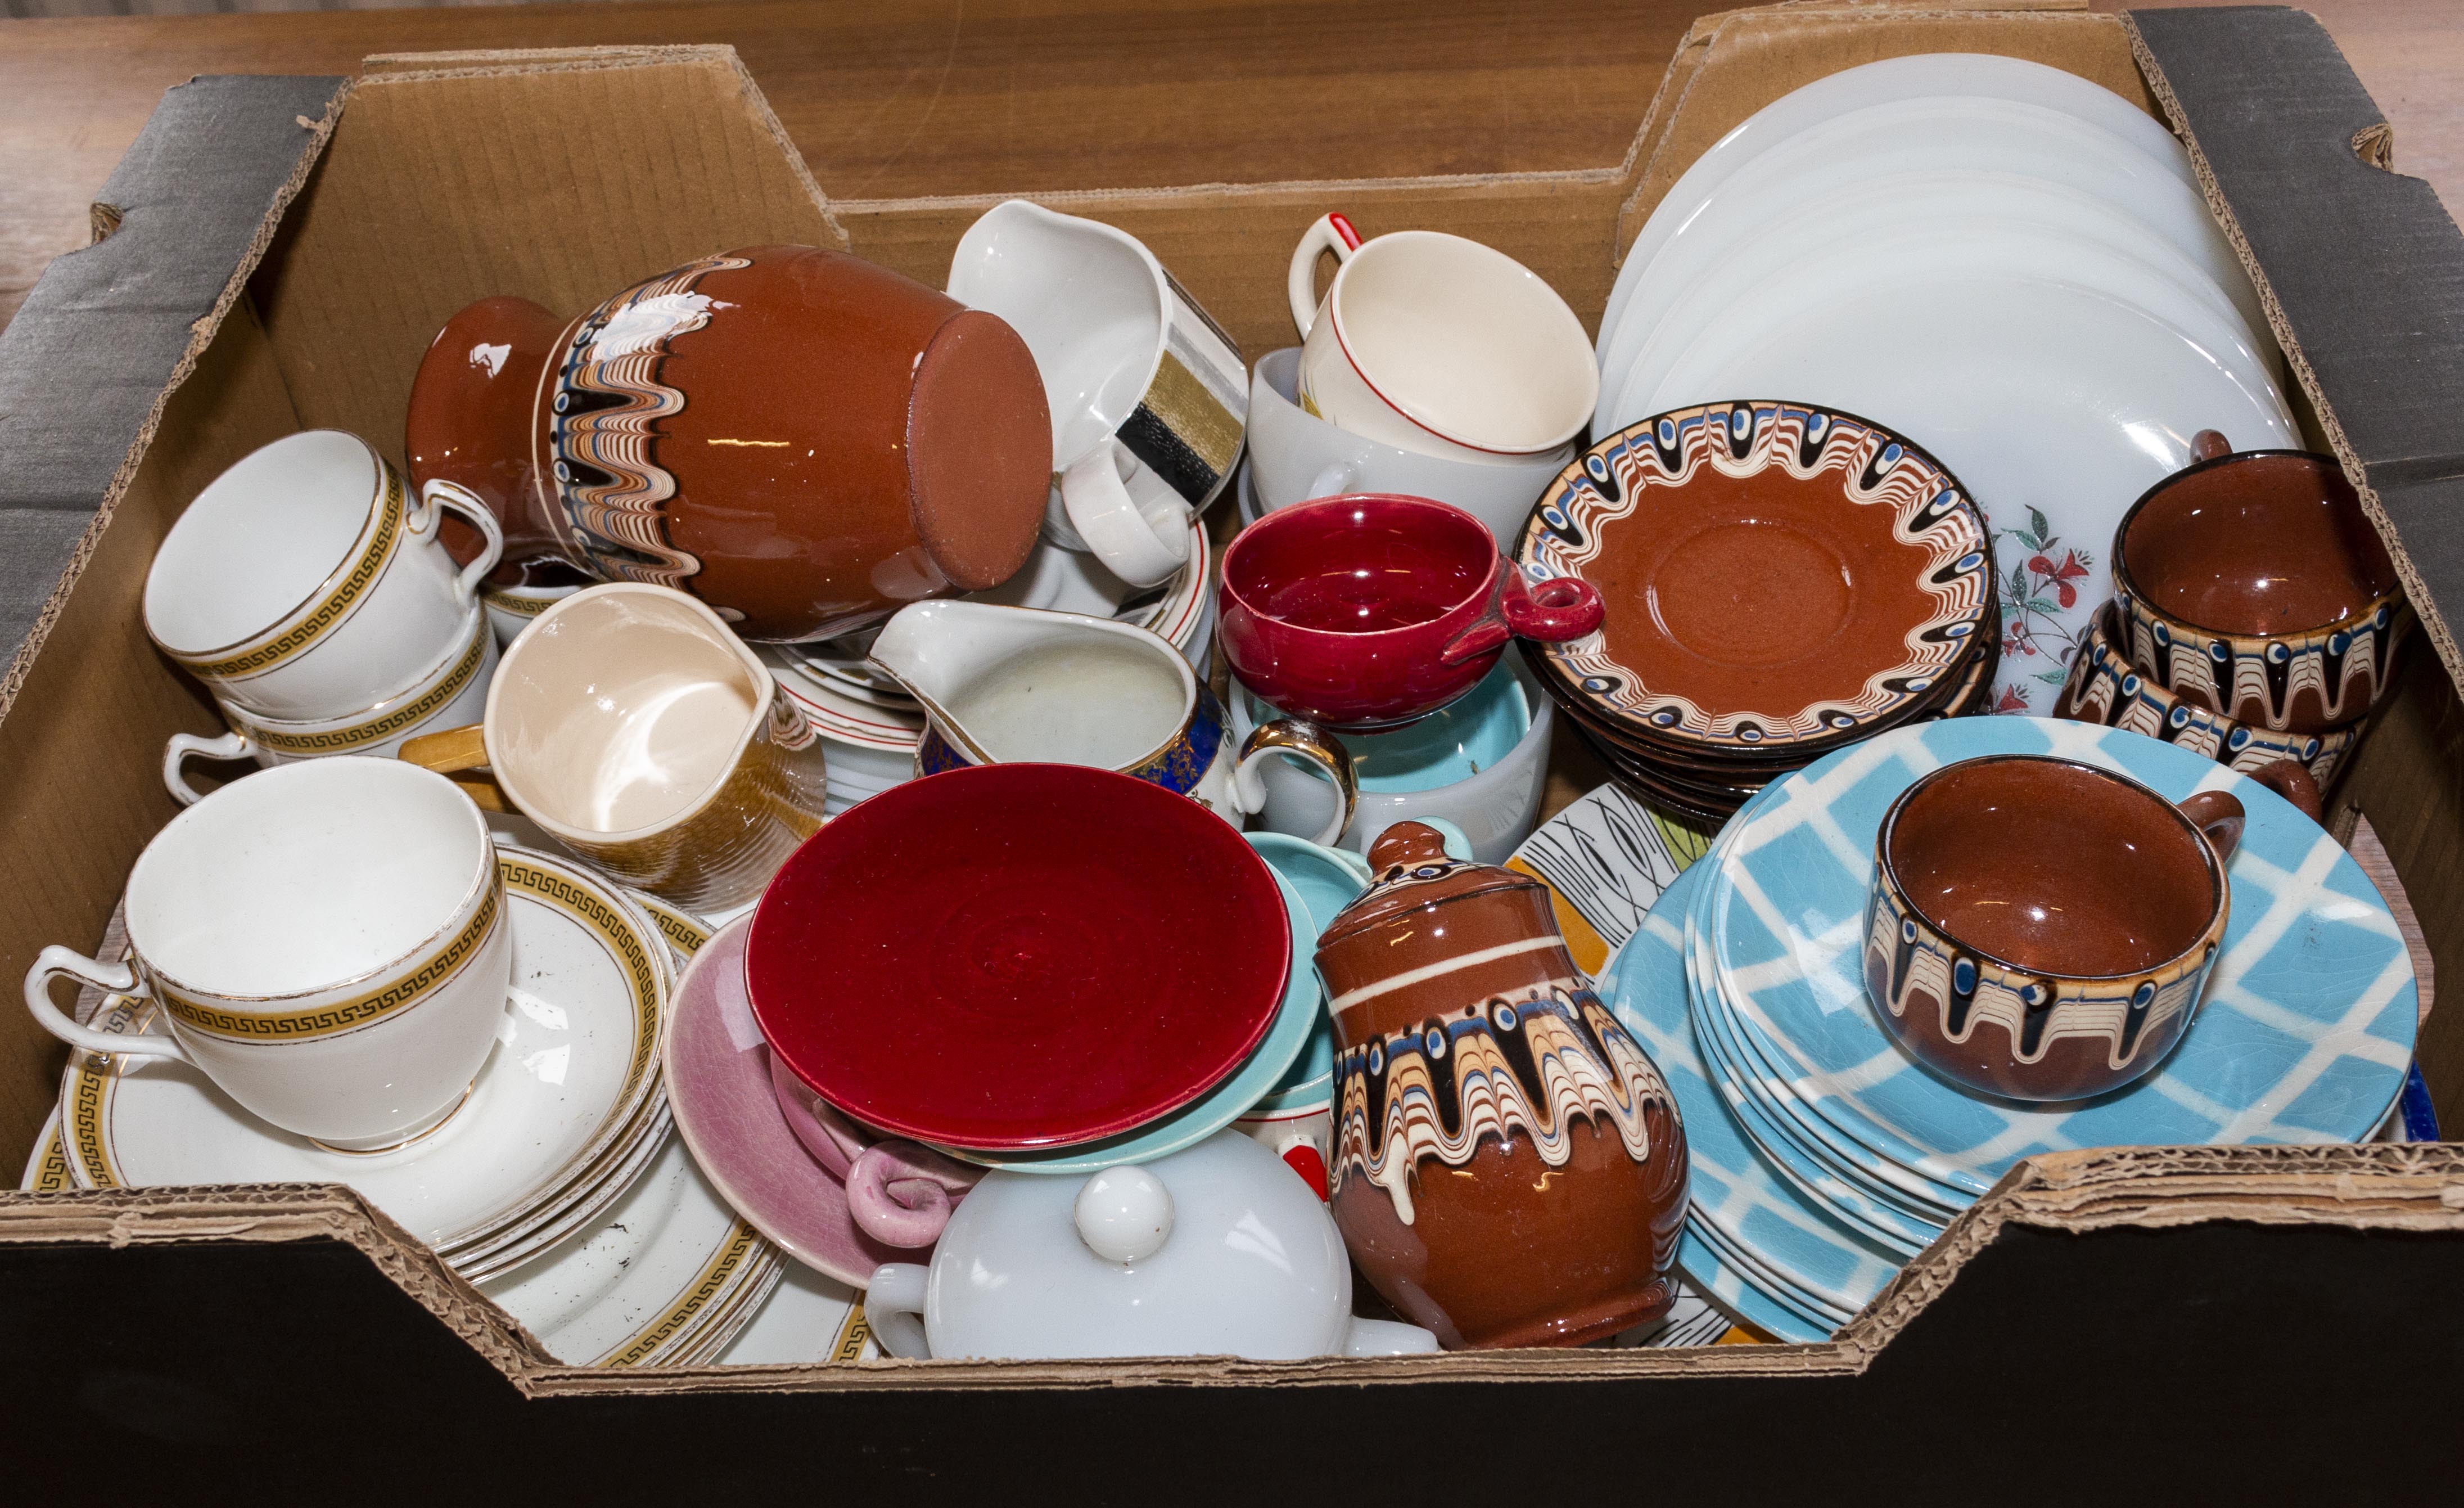 A box containing pottery